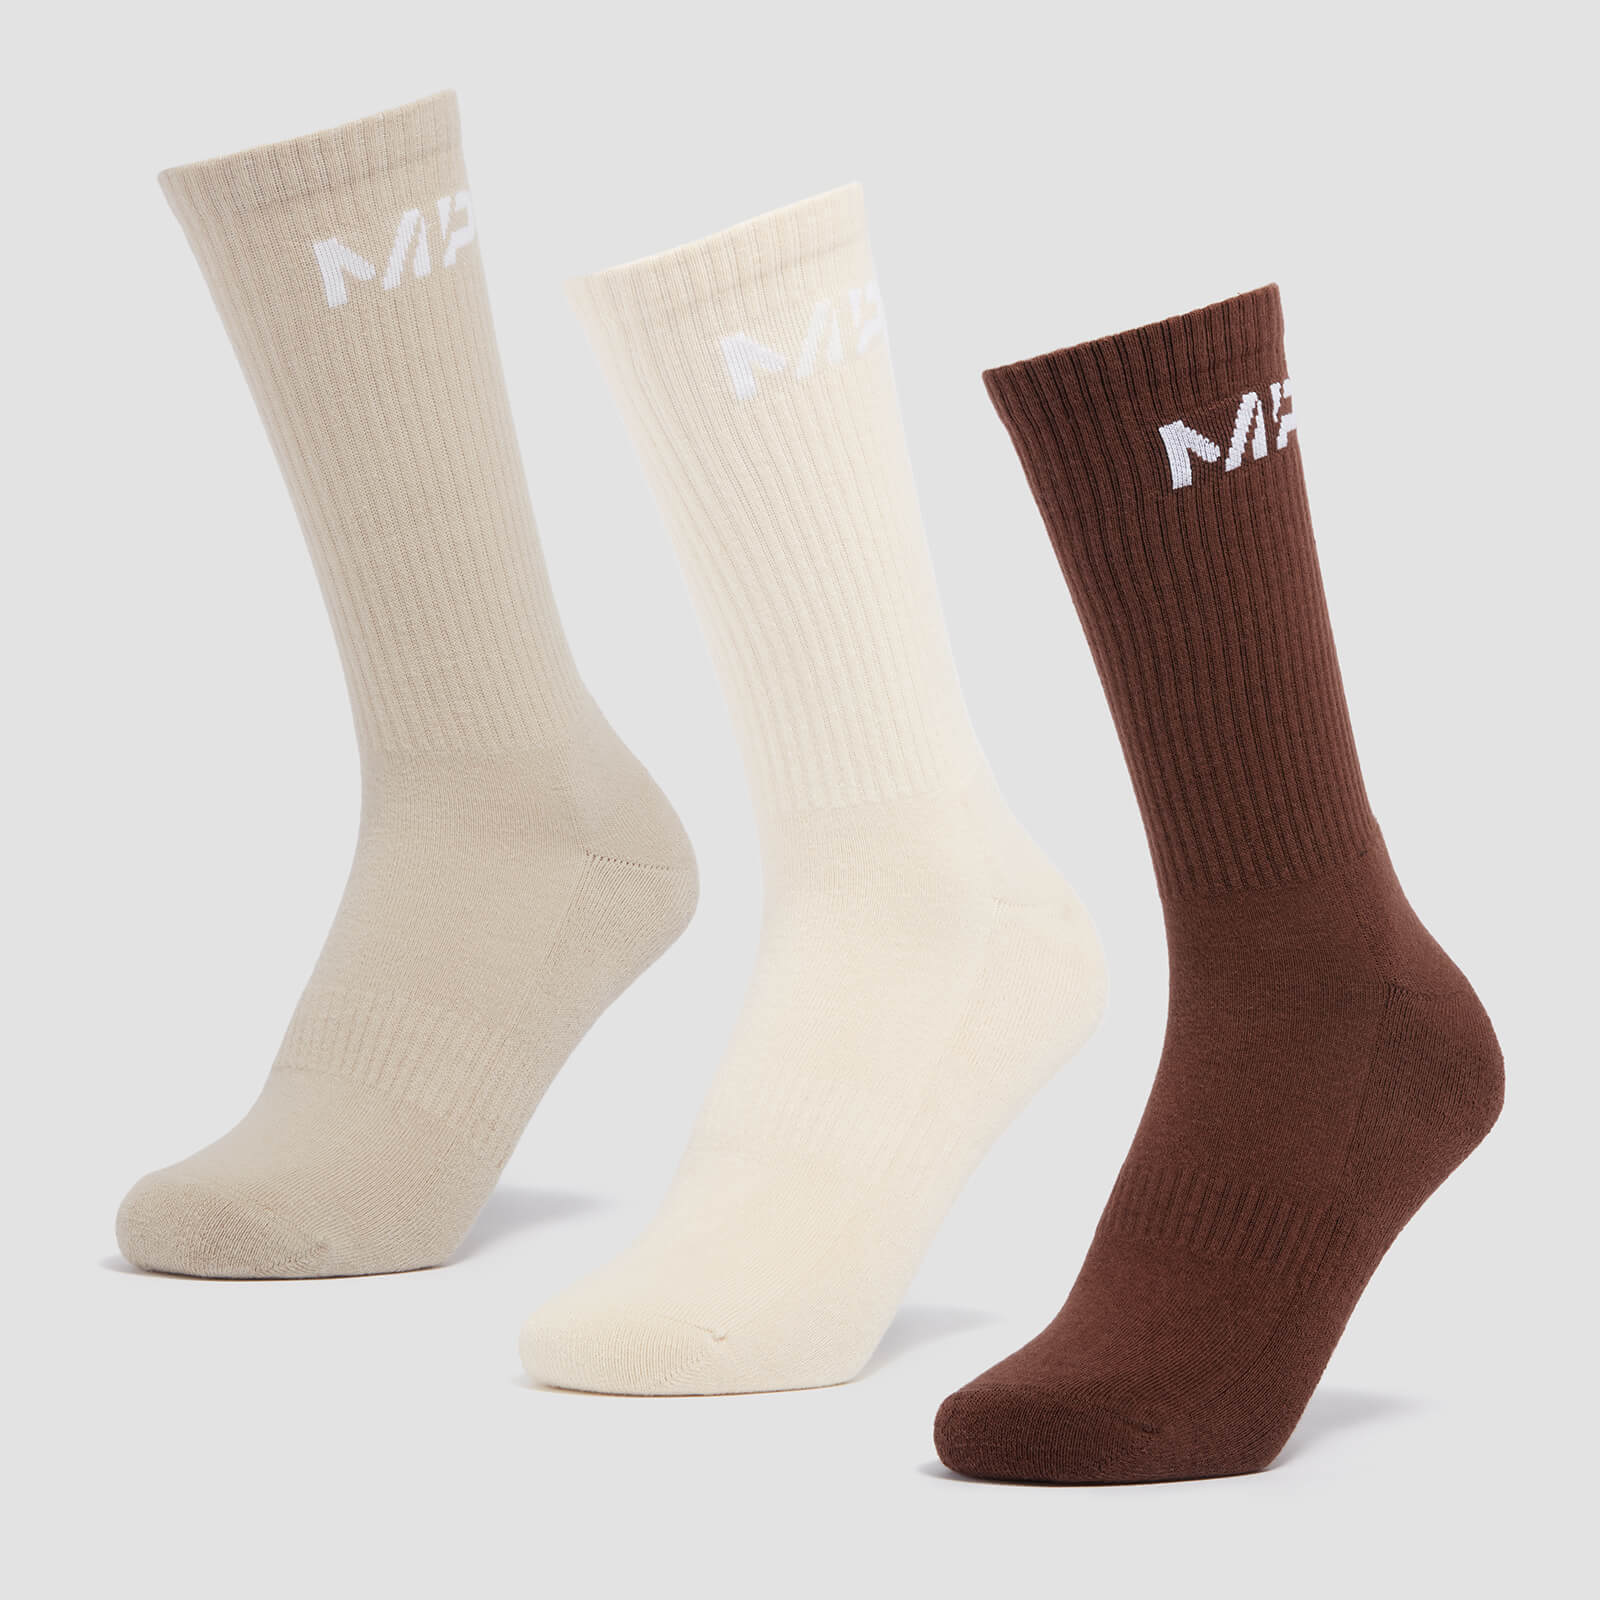 MP Unisex Crew Socks (3 pack) - Dark Brown/Light Taupe/Cream product